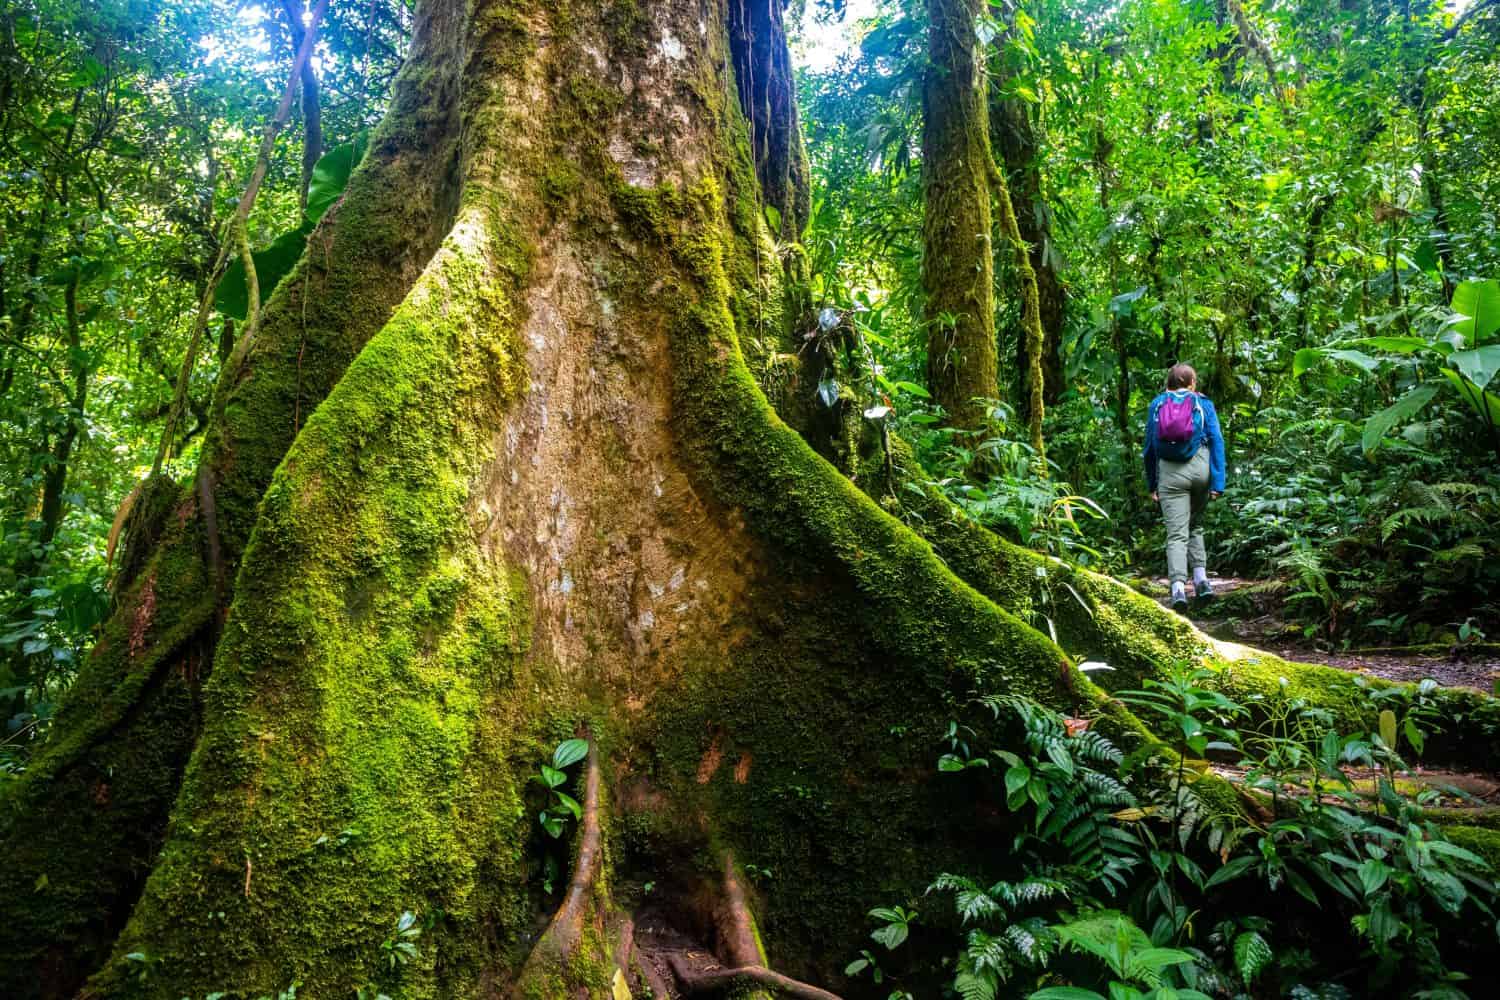 backpacker girl walks through dense jungle in monteverde cloud forest, Costa Rica; walk through fairy tale, magical tropical rainforest; wild nature of Costa Rica	